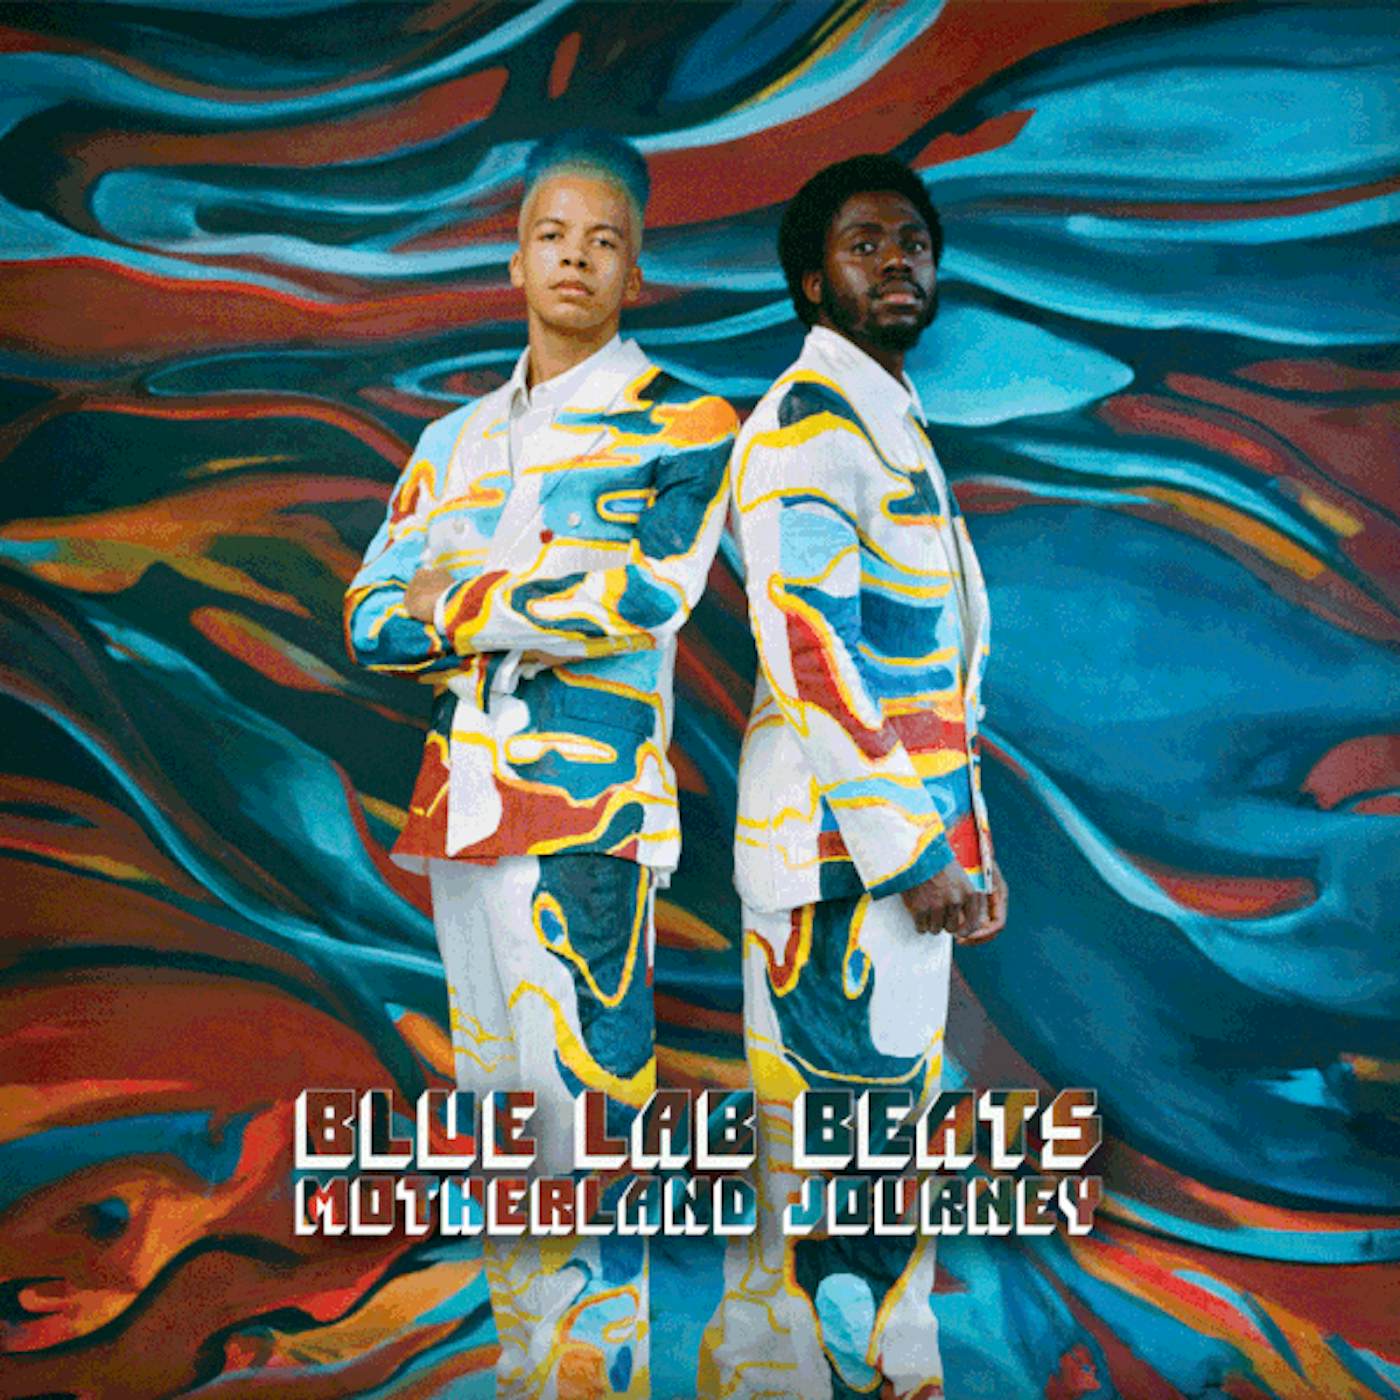 Blue Lab Beats Motherland Journey Vinyl Record